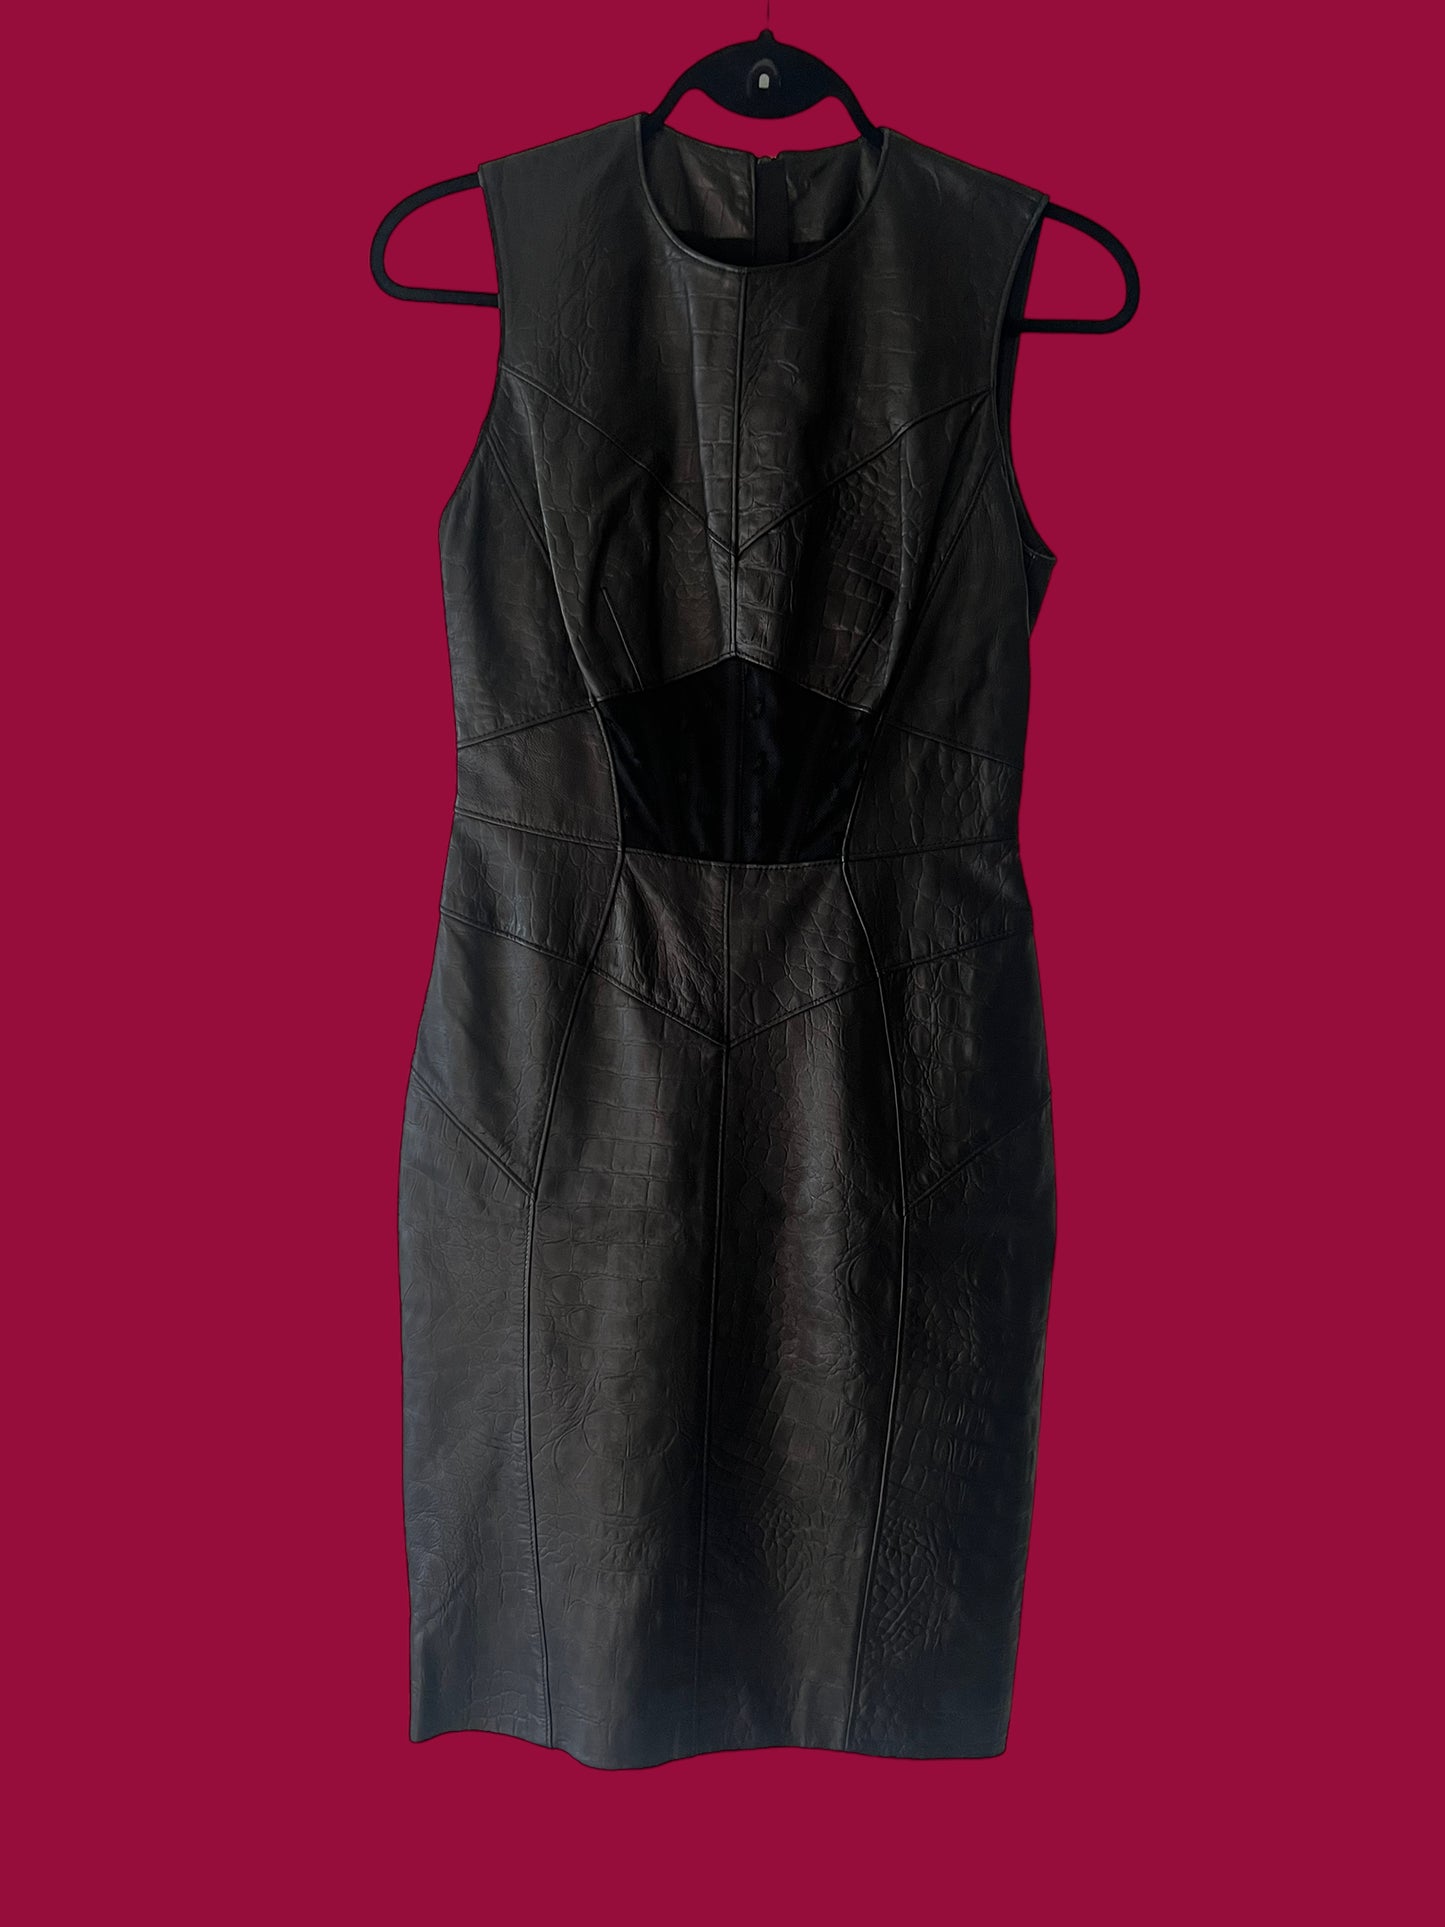 JASON WU “spring 2013” leather dress size small